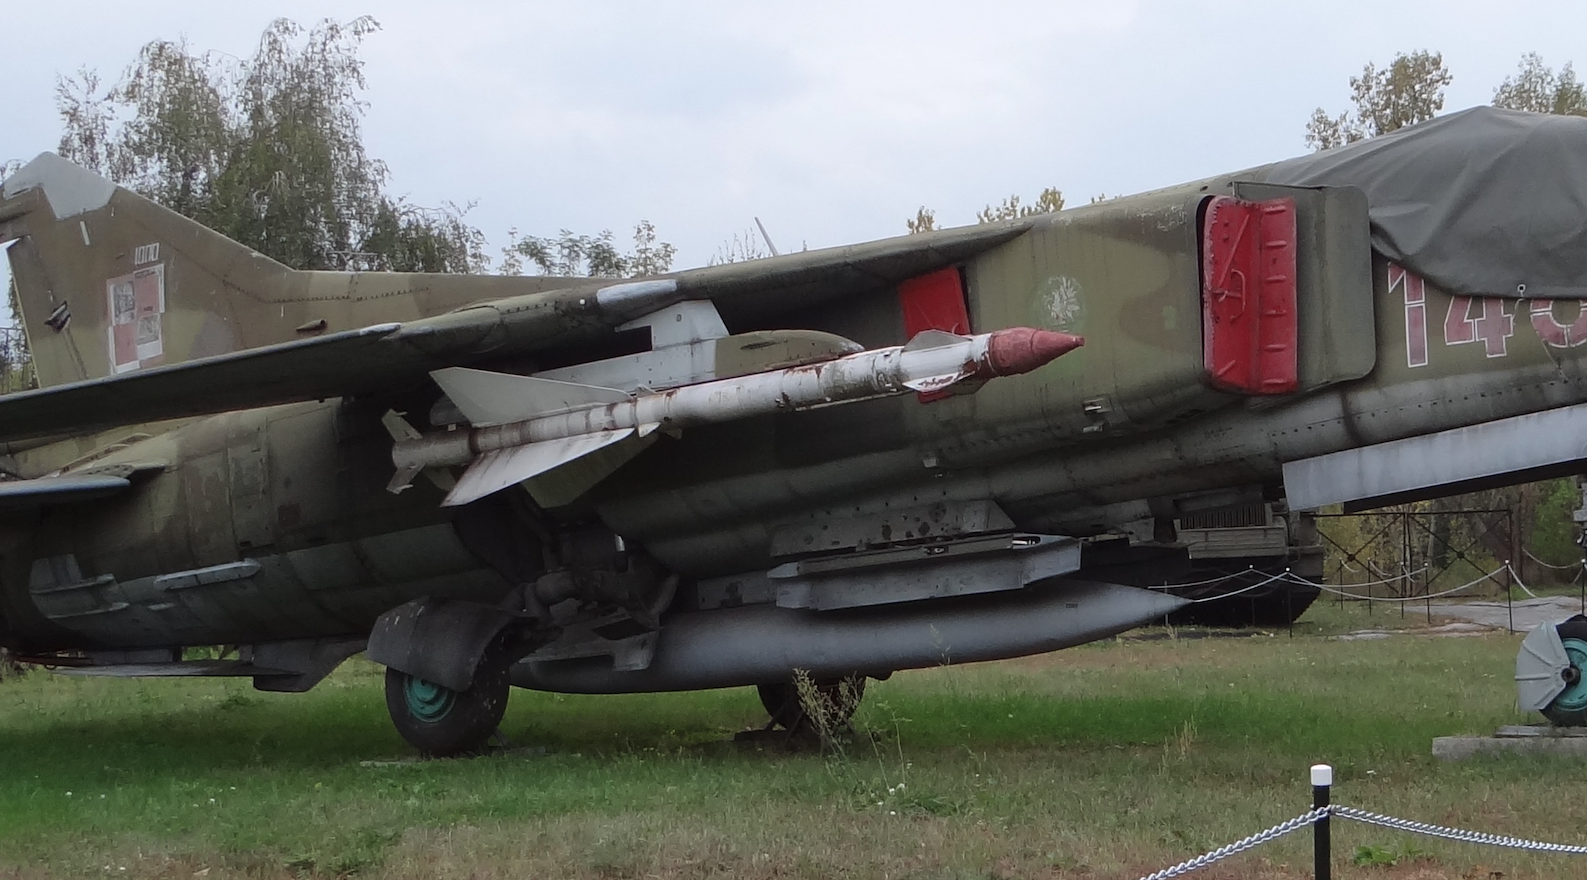 MiG-23 MF nb 148 z pocisk rakietowy R-23R. 2012 rok. Zdjęcie Karol Placha Hetman